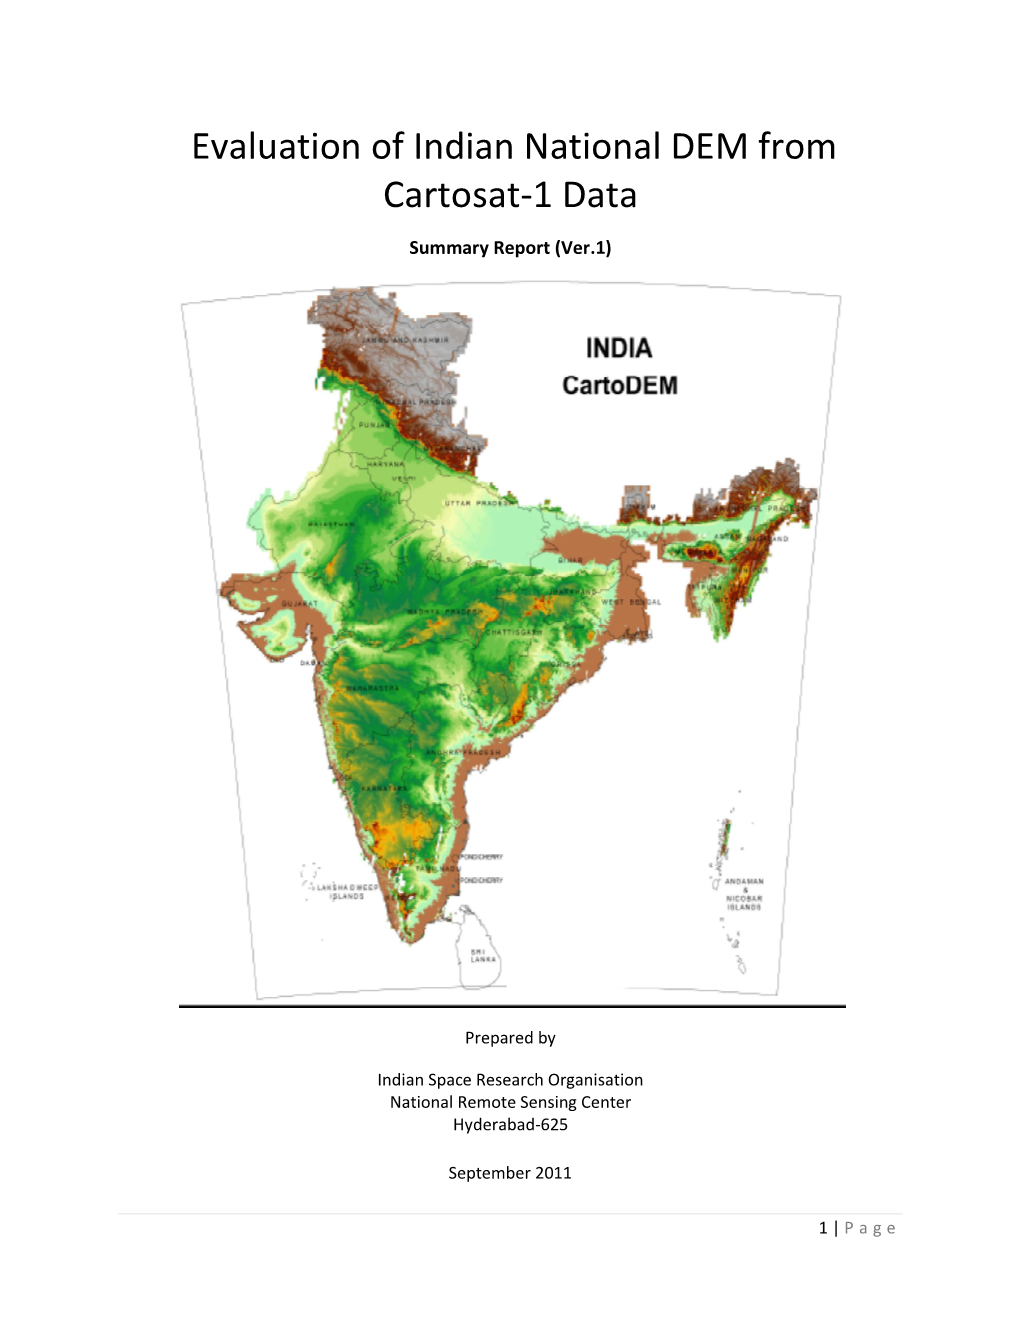 Evaluation of Indian National DEM from Cartosat-1 Data